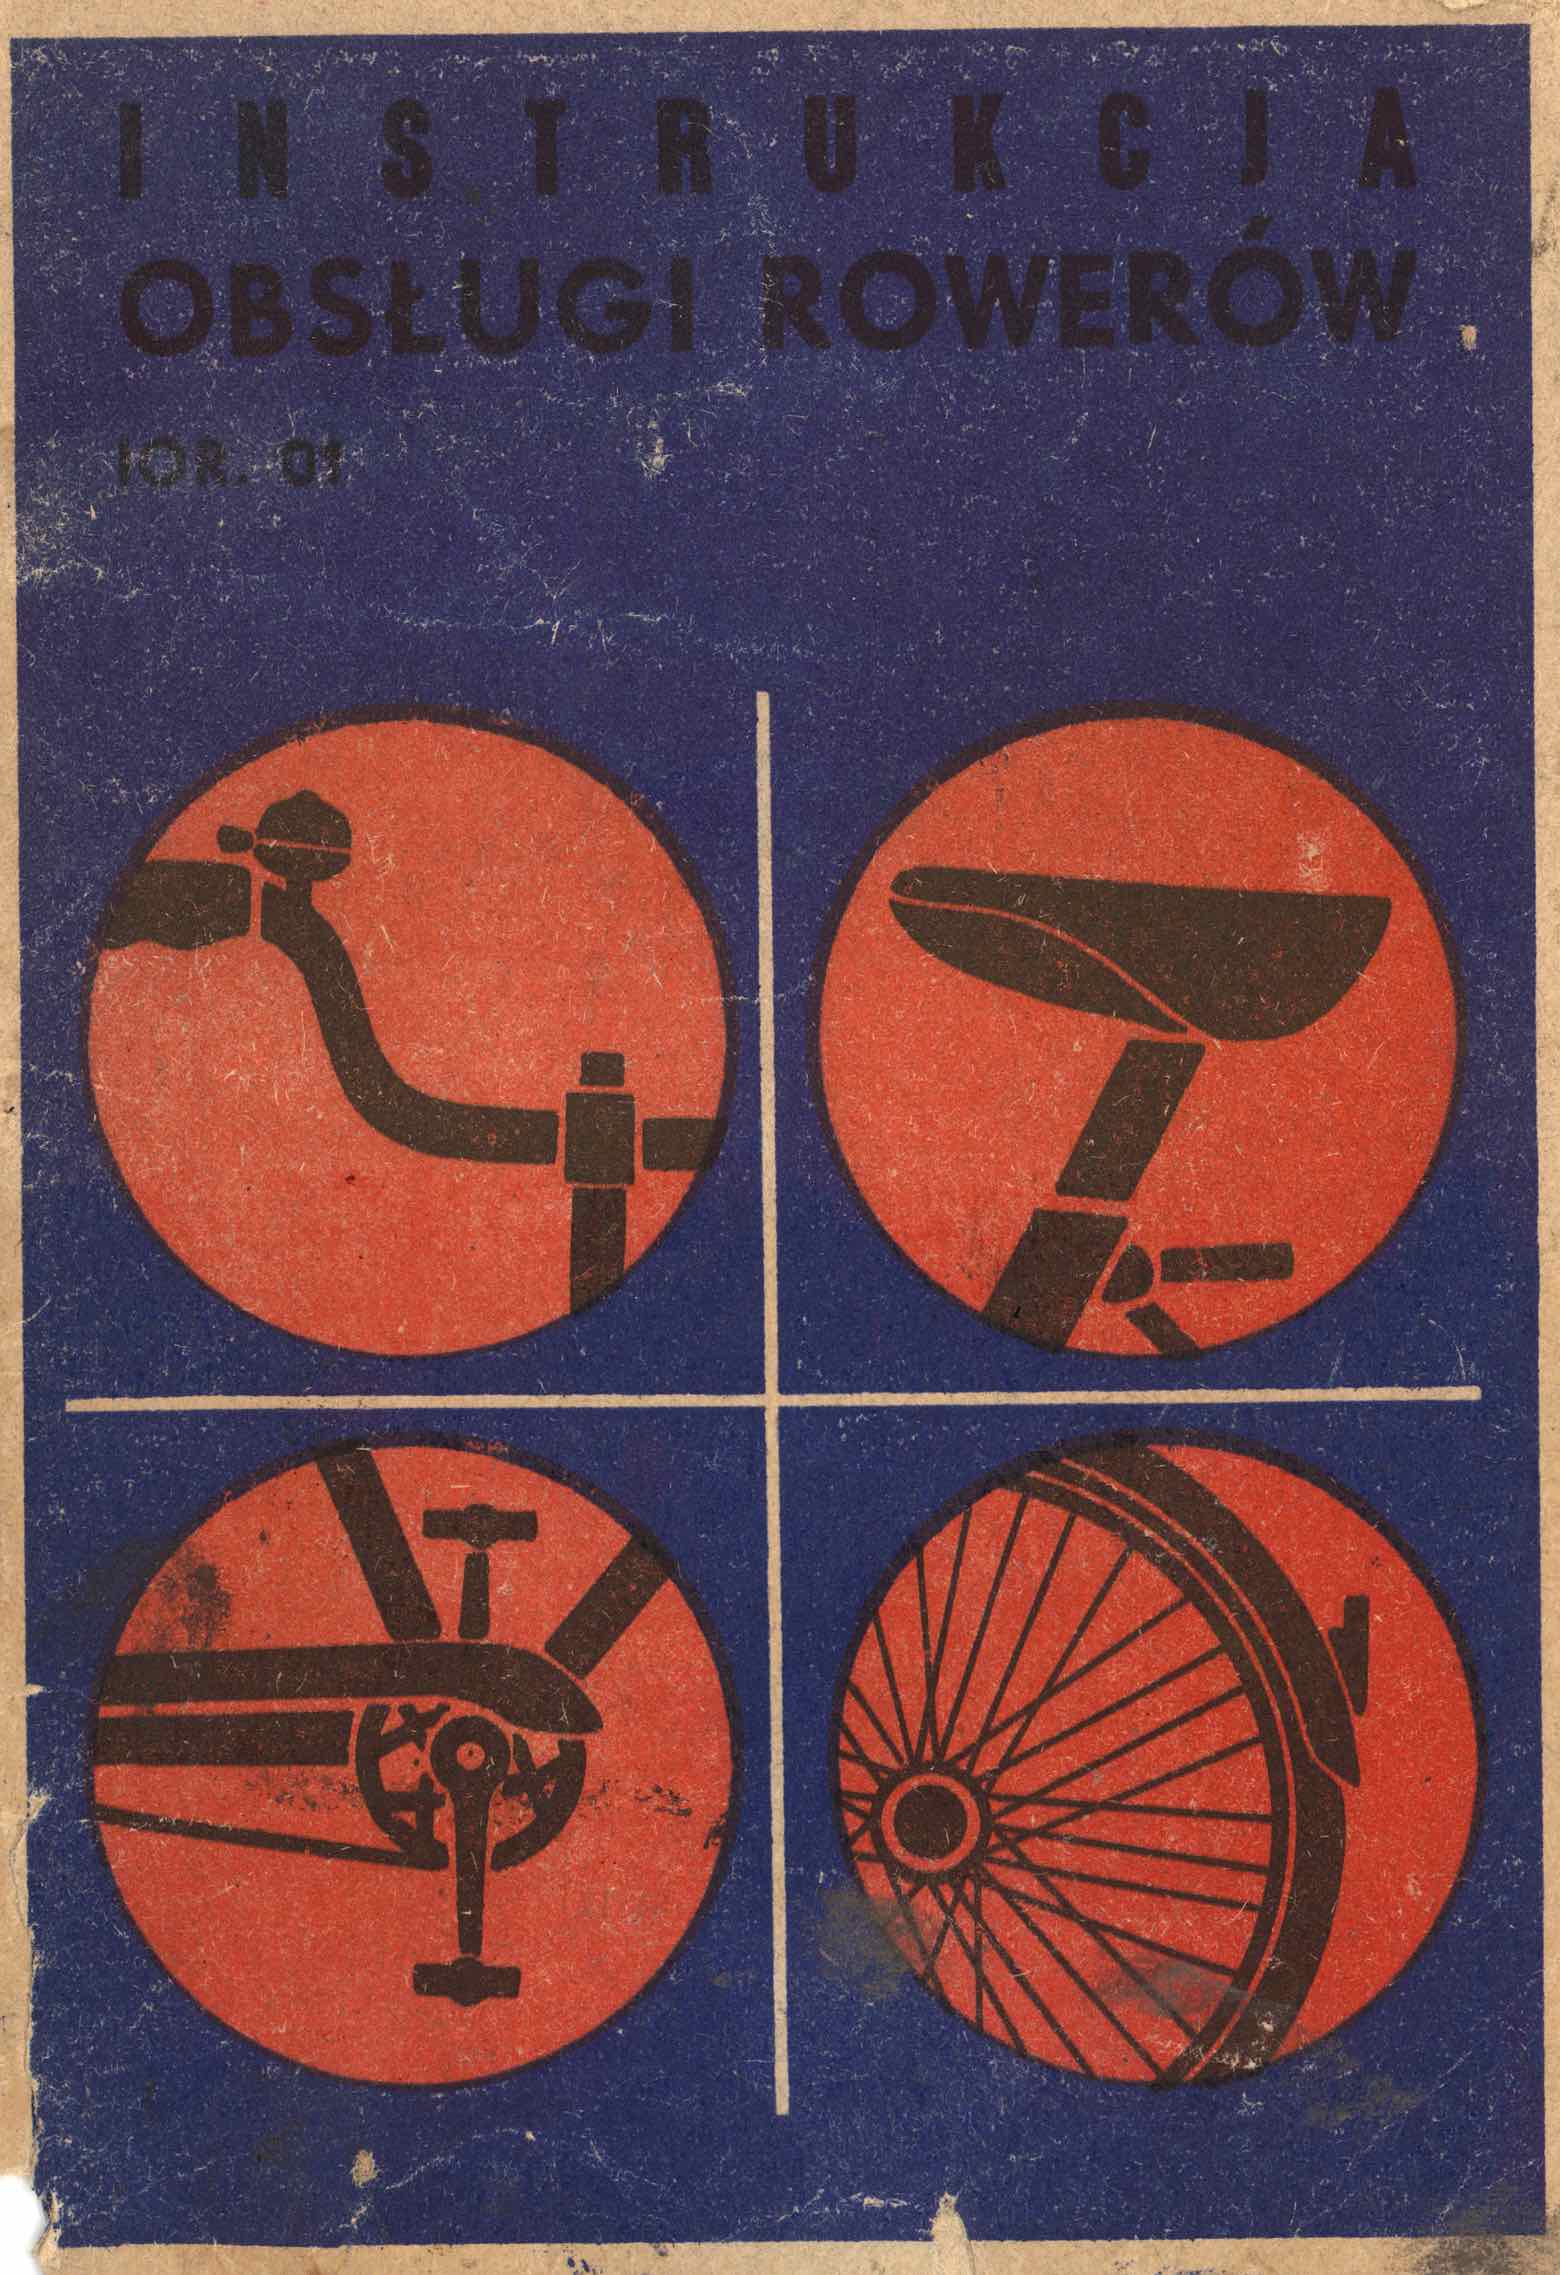 Romet - Instrukcja Obslugi Rowerow 1976 front cover main image